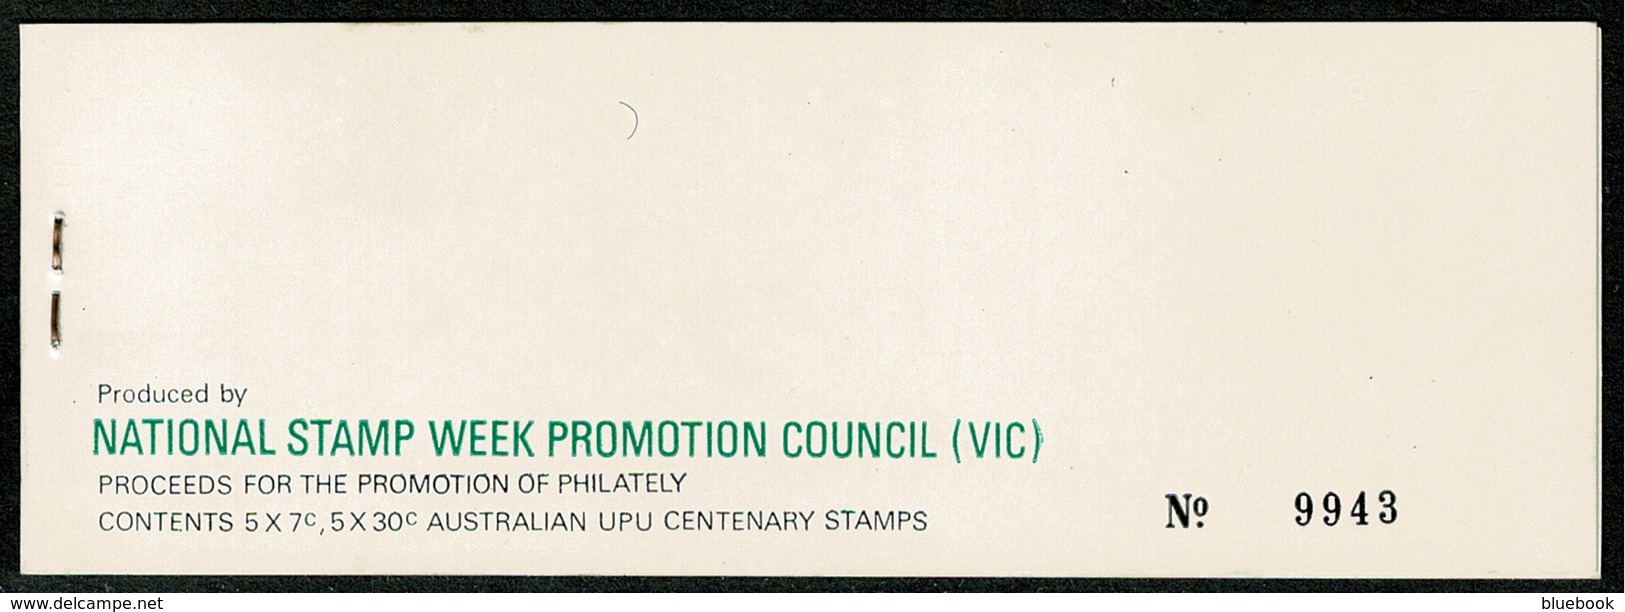 Ref 1237 - Australia 1974 - U.P.U. Centenary Stamp Booklet - Booklets